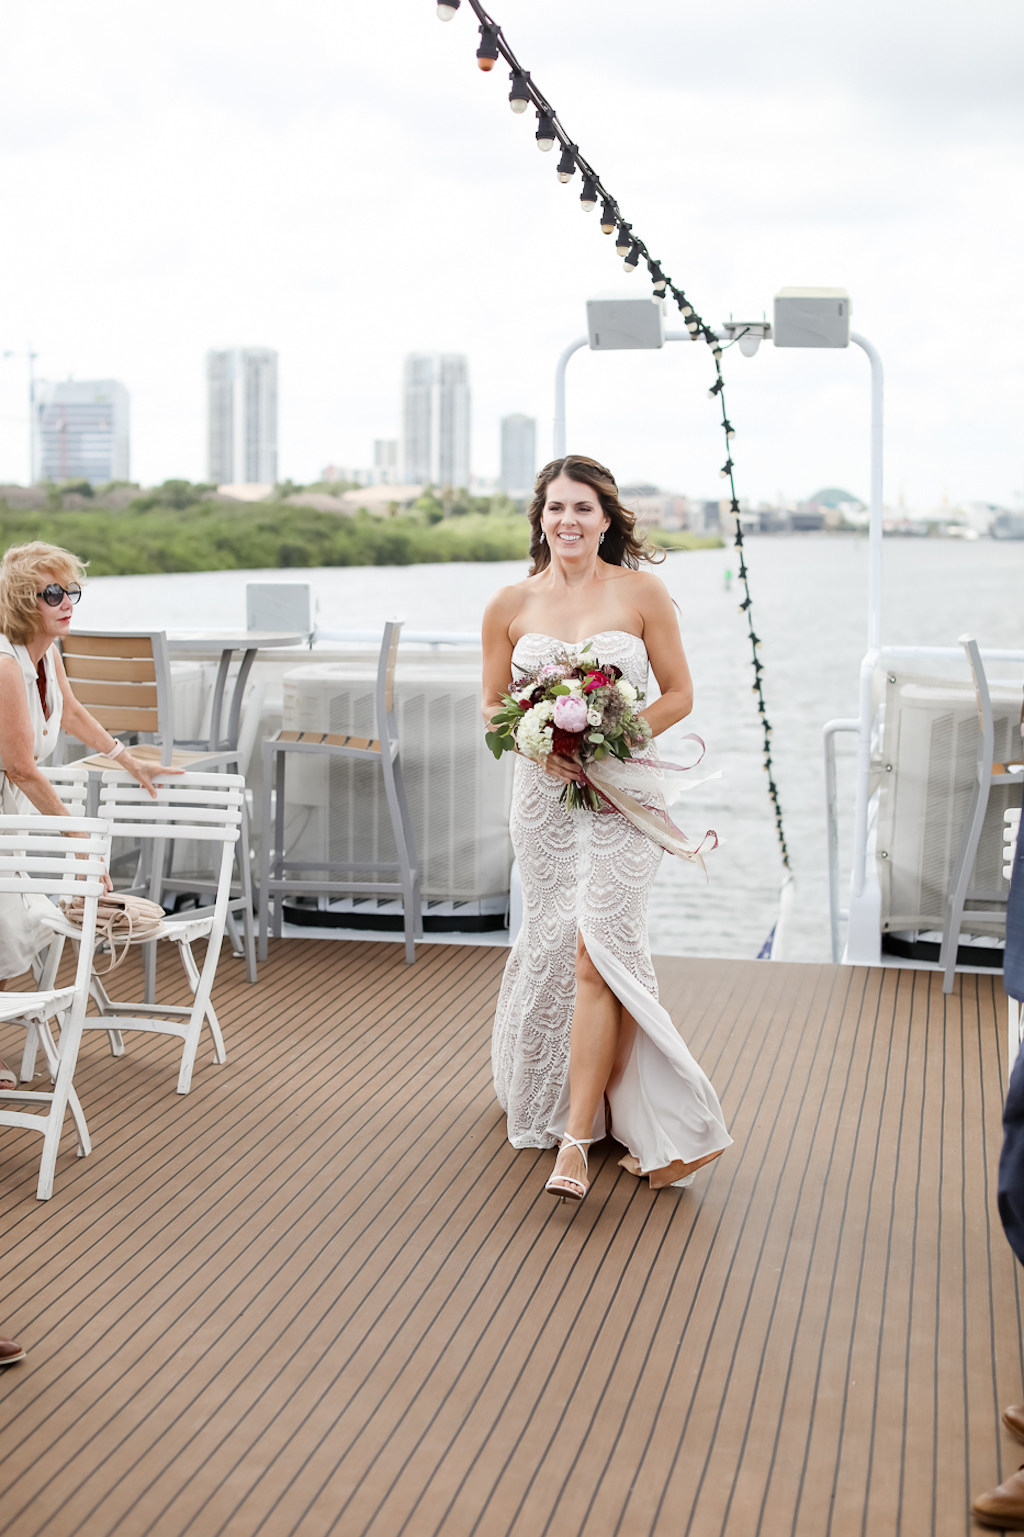 Florida Bride Walking Down the Wedding Ceremony Processional Portrait | Tampa Bay Wedding Photographer Lifelong Photography Studio | Clearwater Beach Waterfront Wedding Venue Yacht Starship